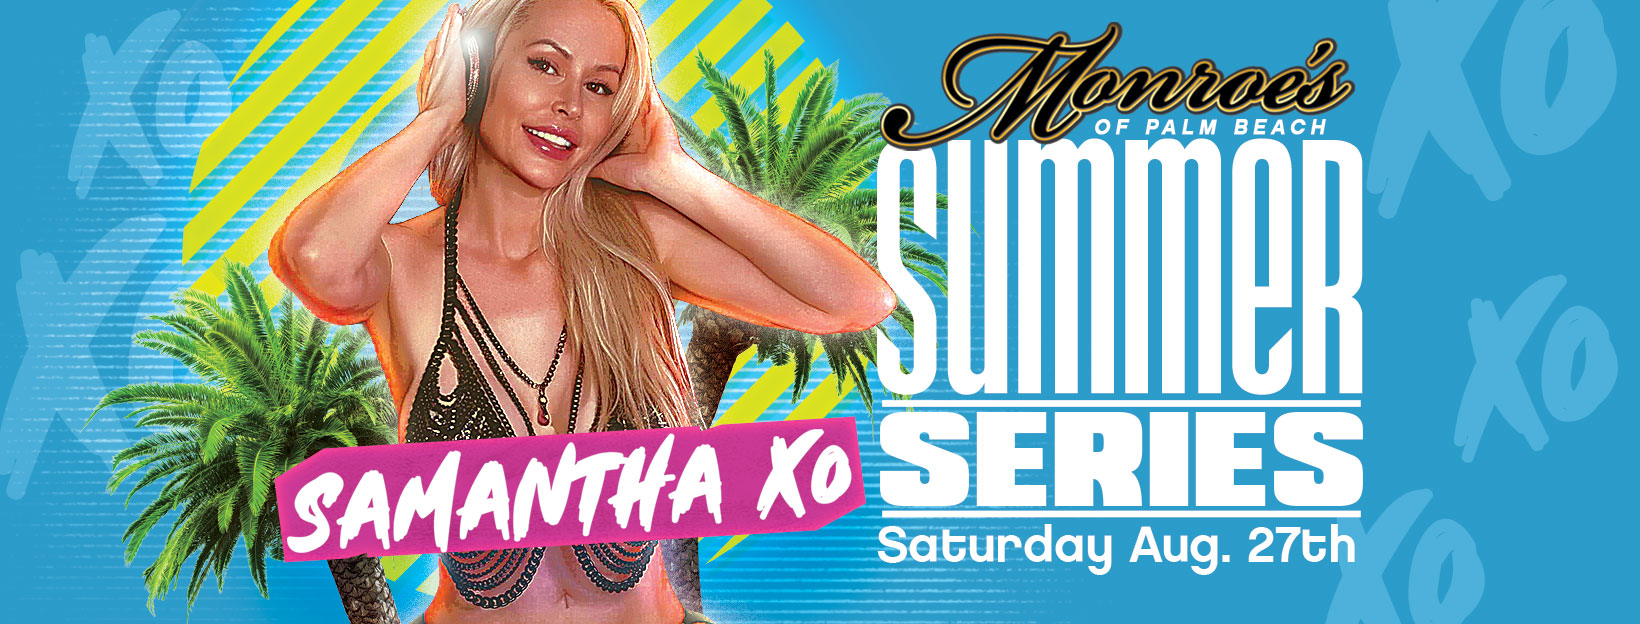 Samantha Xo Performing LIVE at Monroe's Palm Beach Summer Series